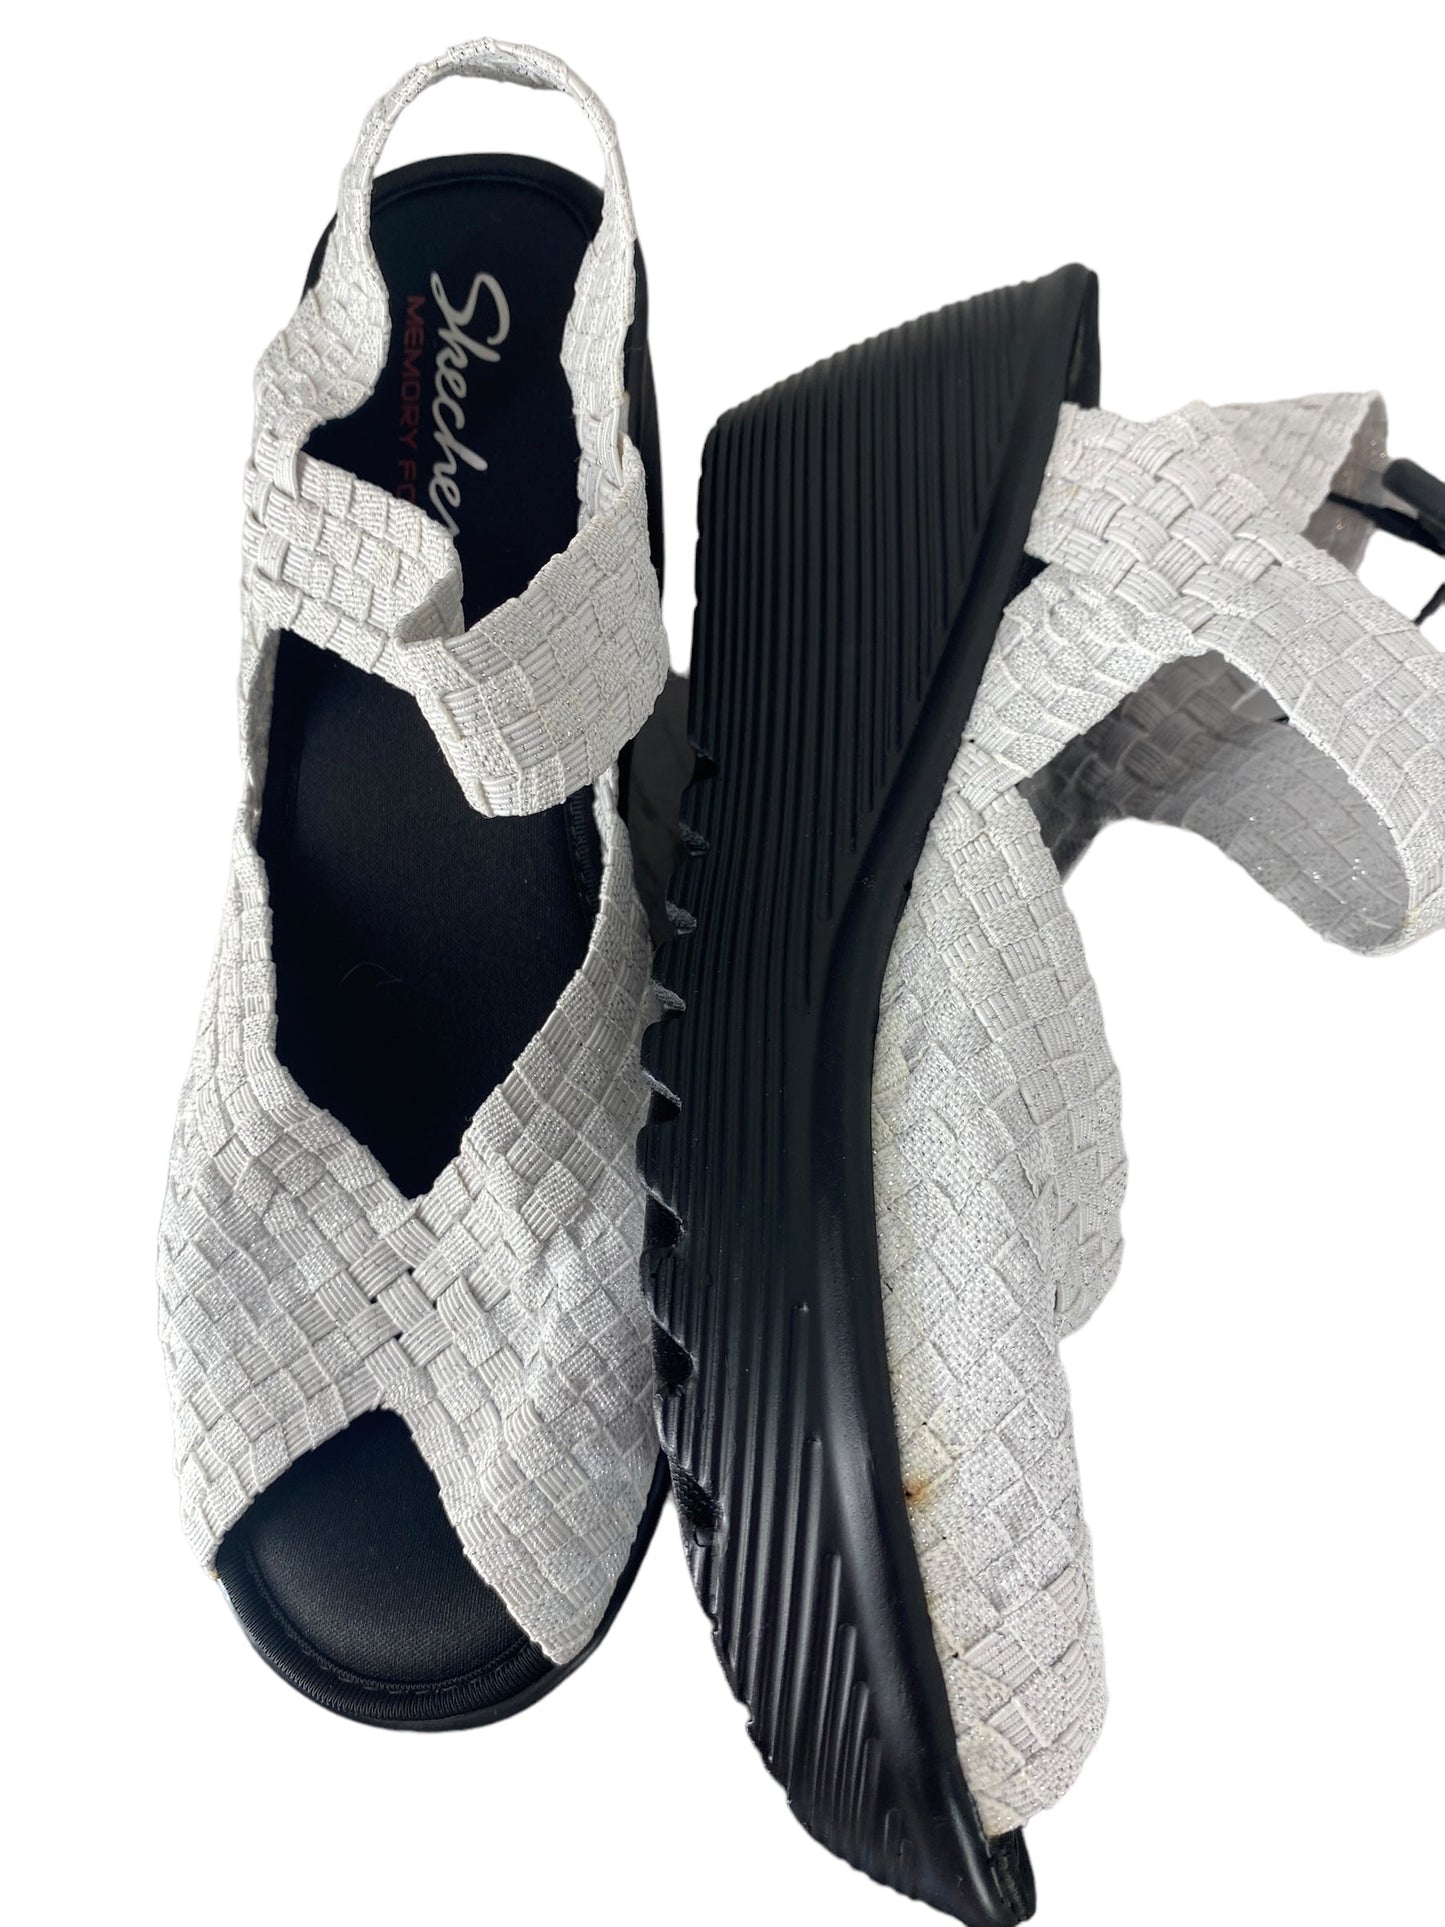 Silver Sandals Heels Wedge Skechers, Size 8